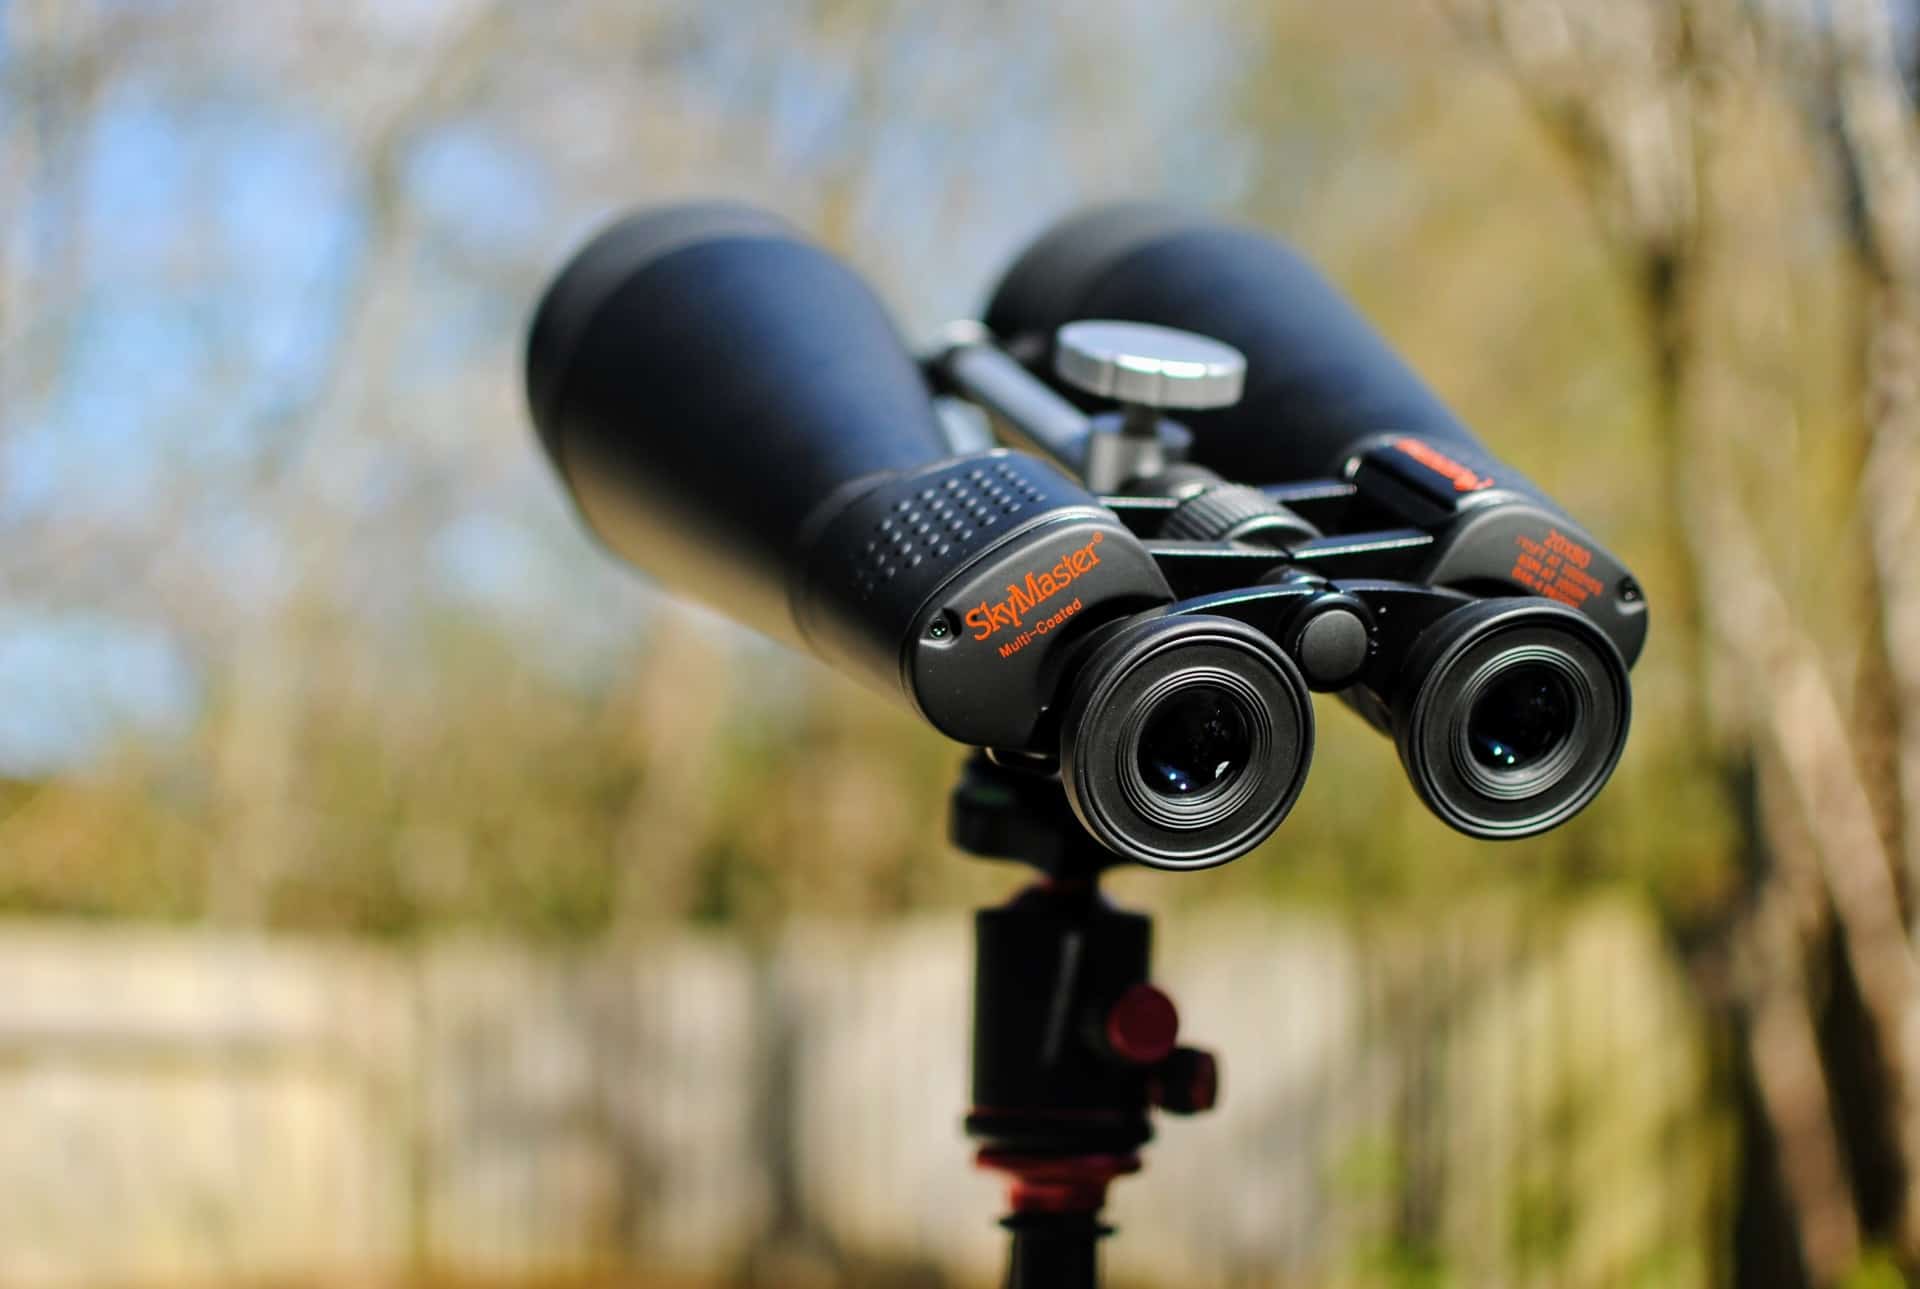 Binoculars tilt-shifted on a tripod